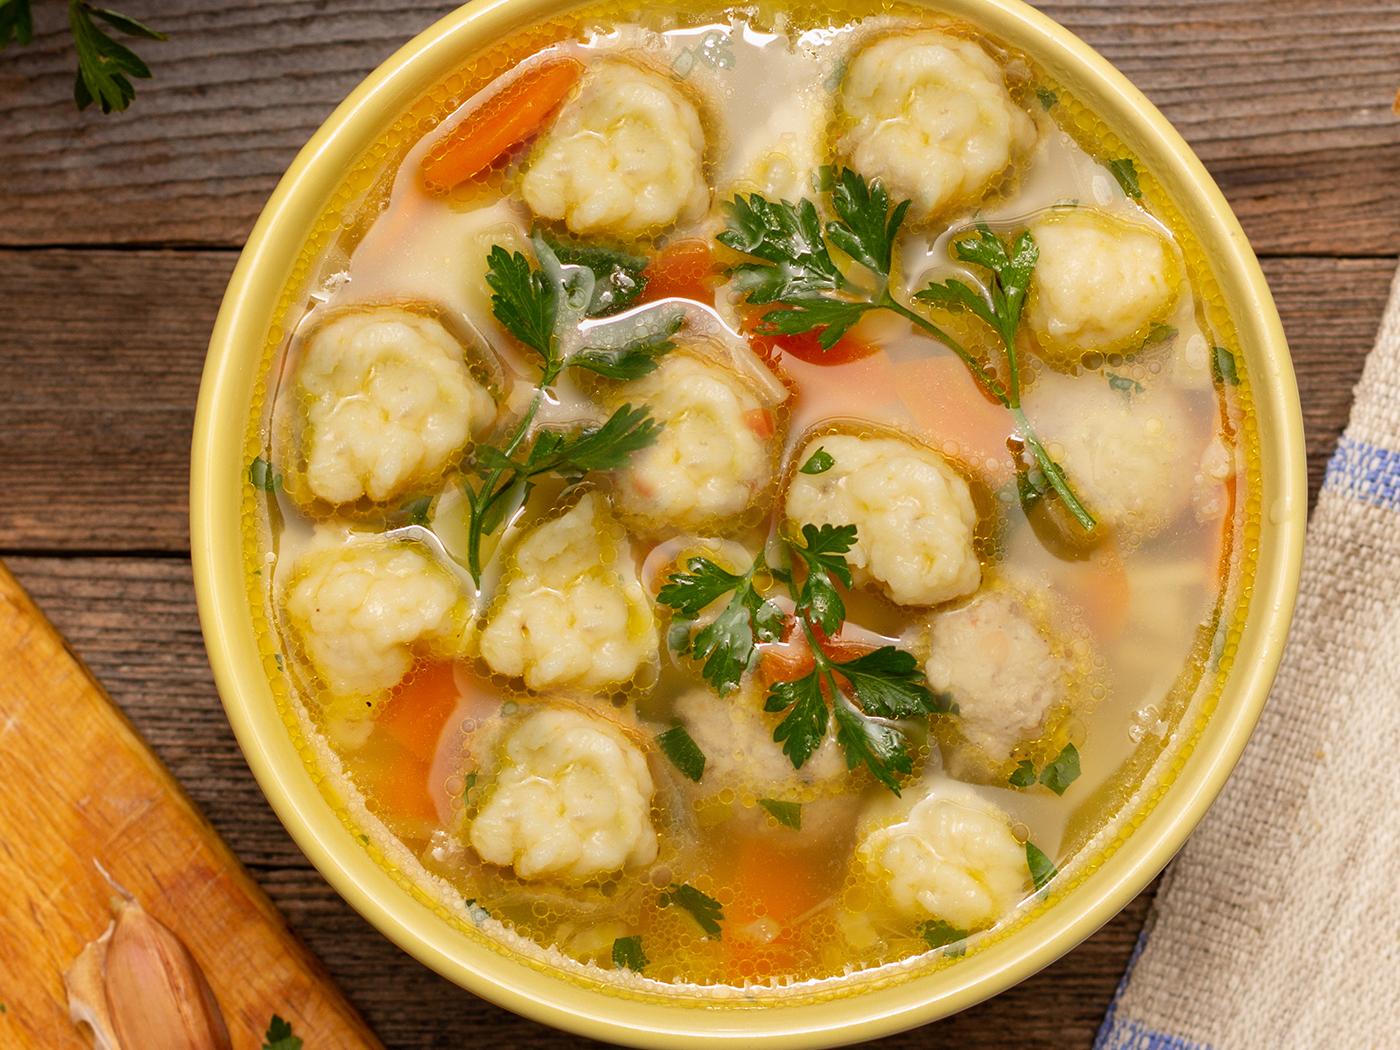 Garden Vegetables and Blue Cheese-Herb Dumpling Soup